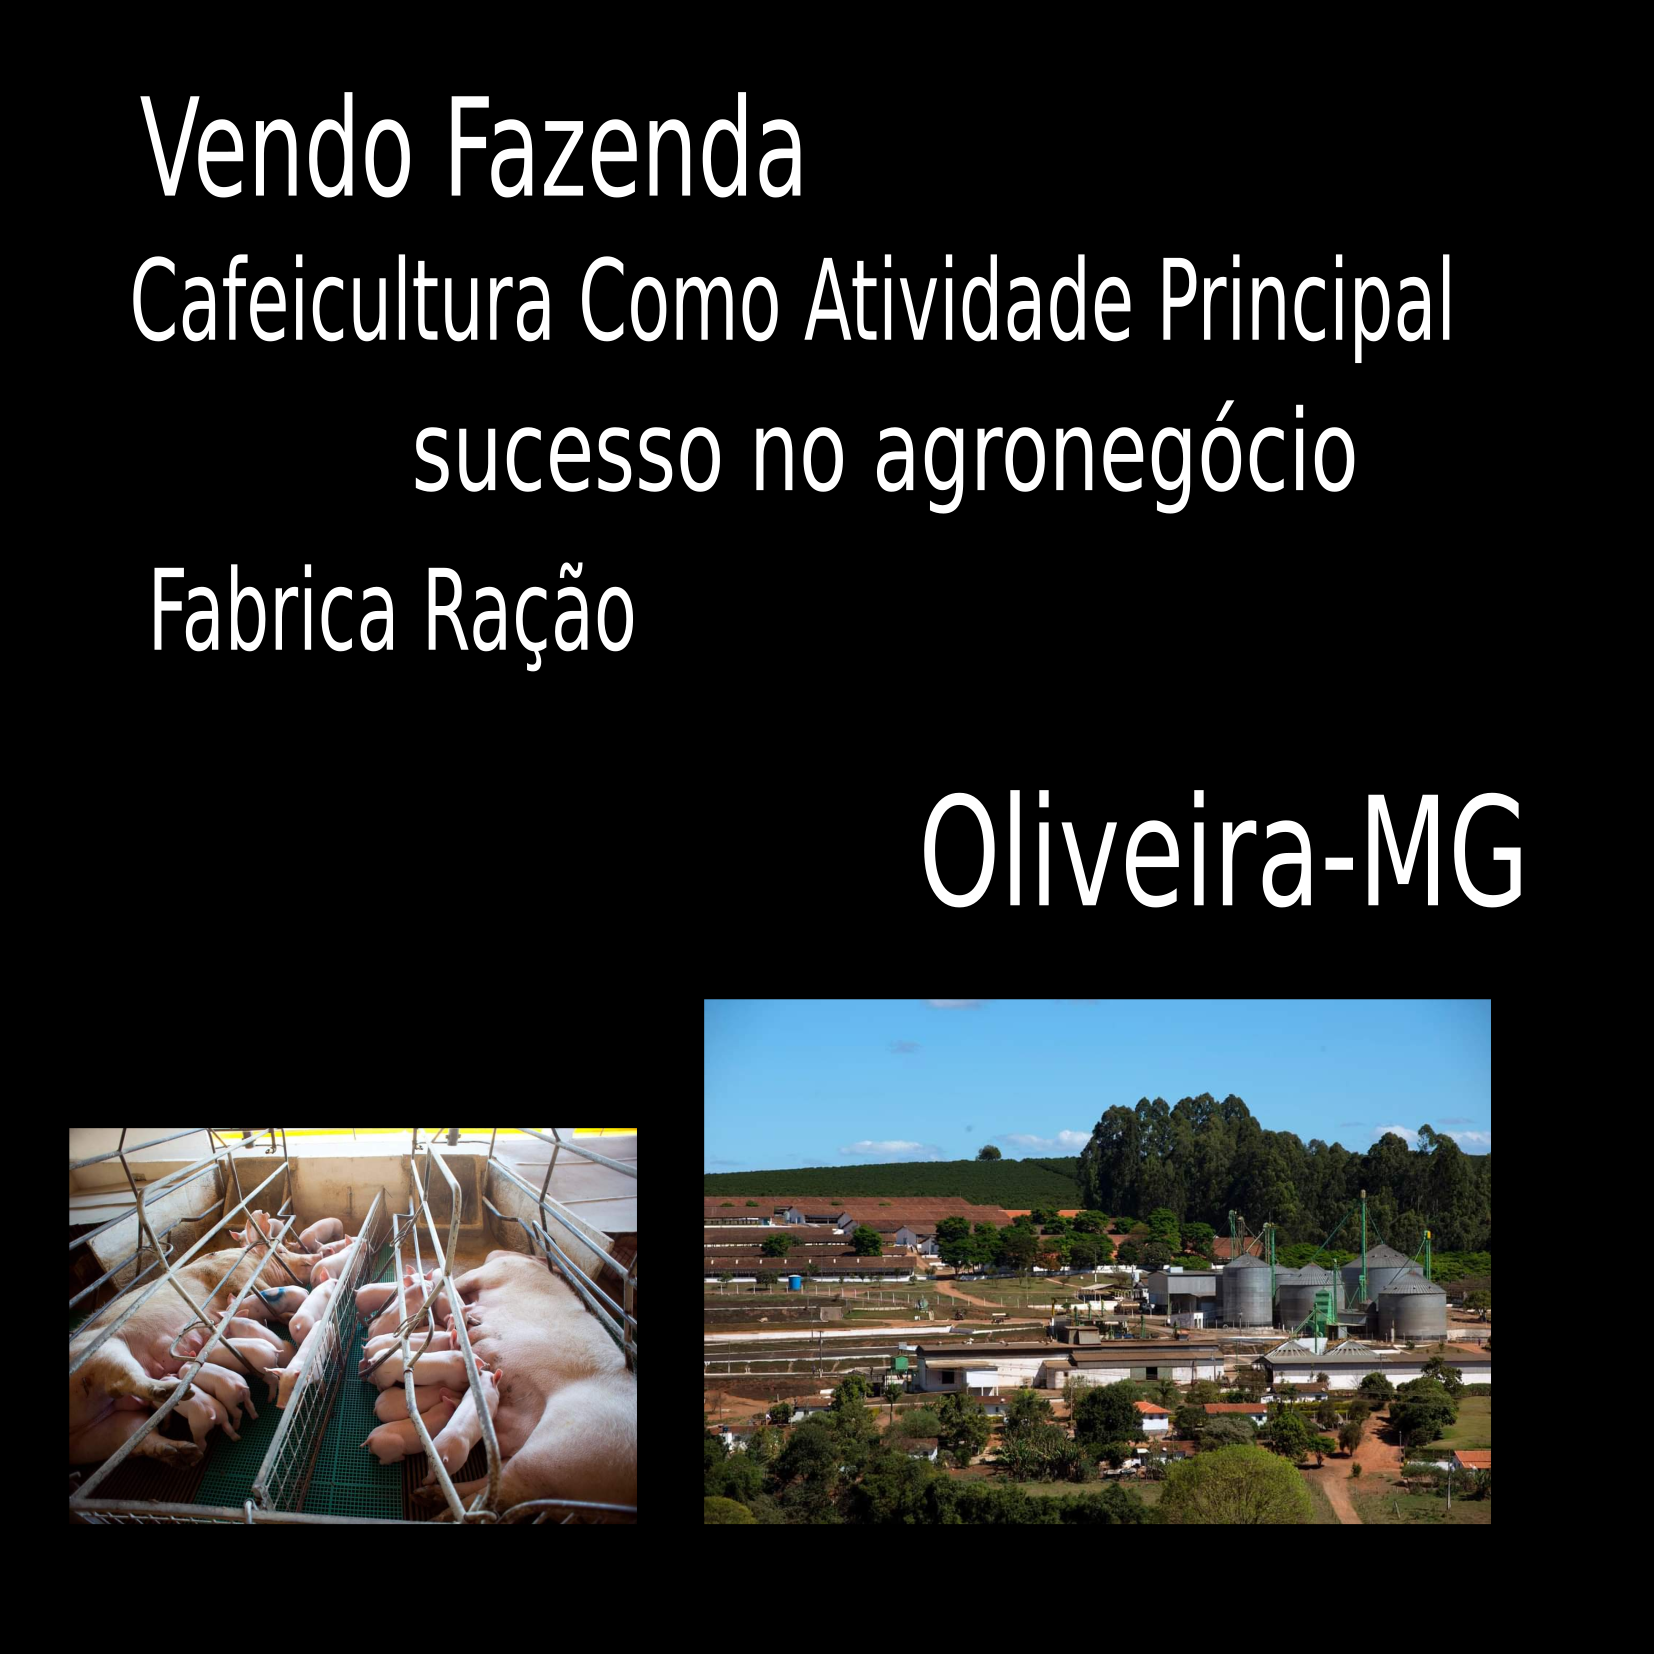 Vendo fazenda de 2000 hectares Oliveira- MG 02